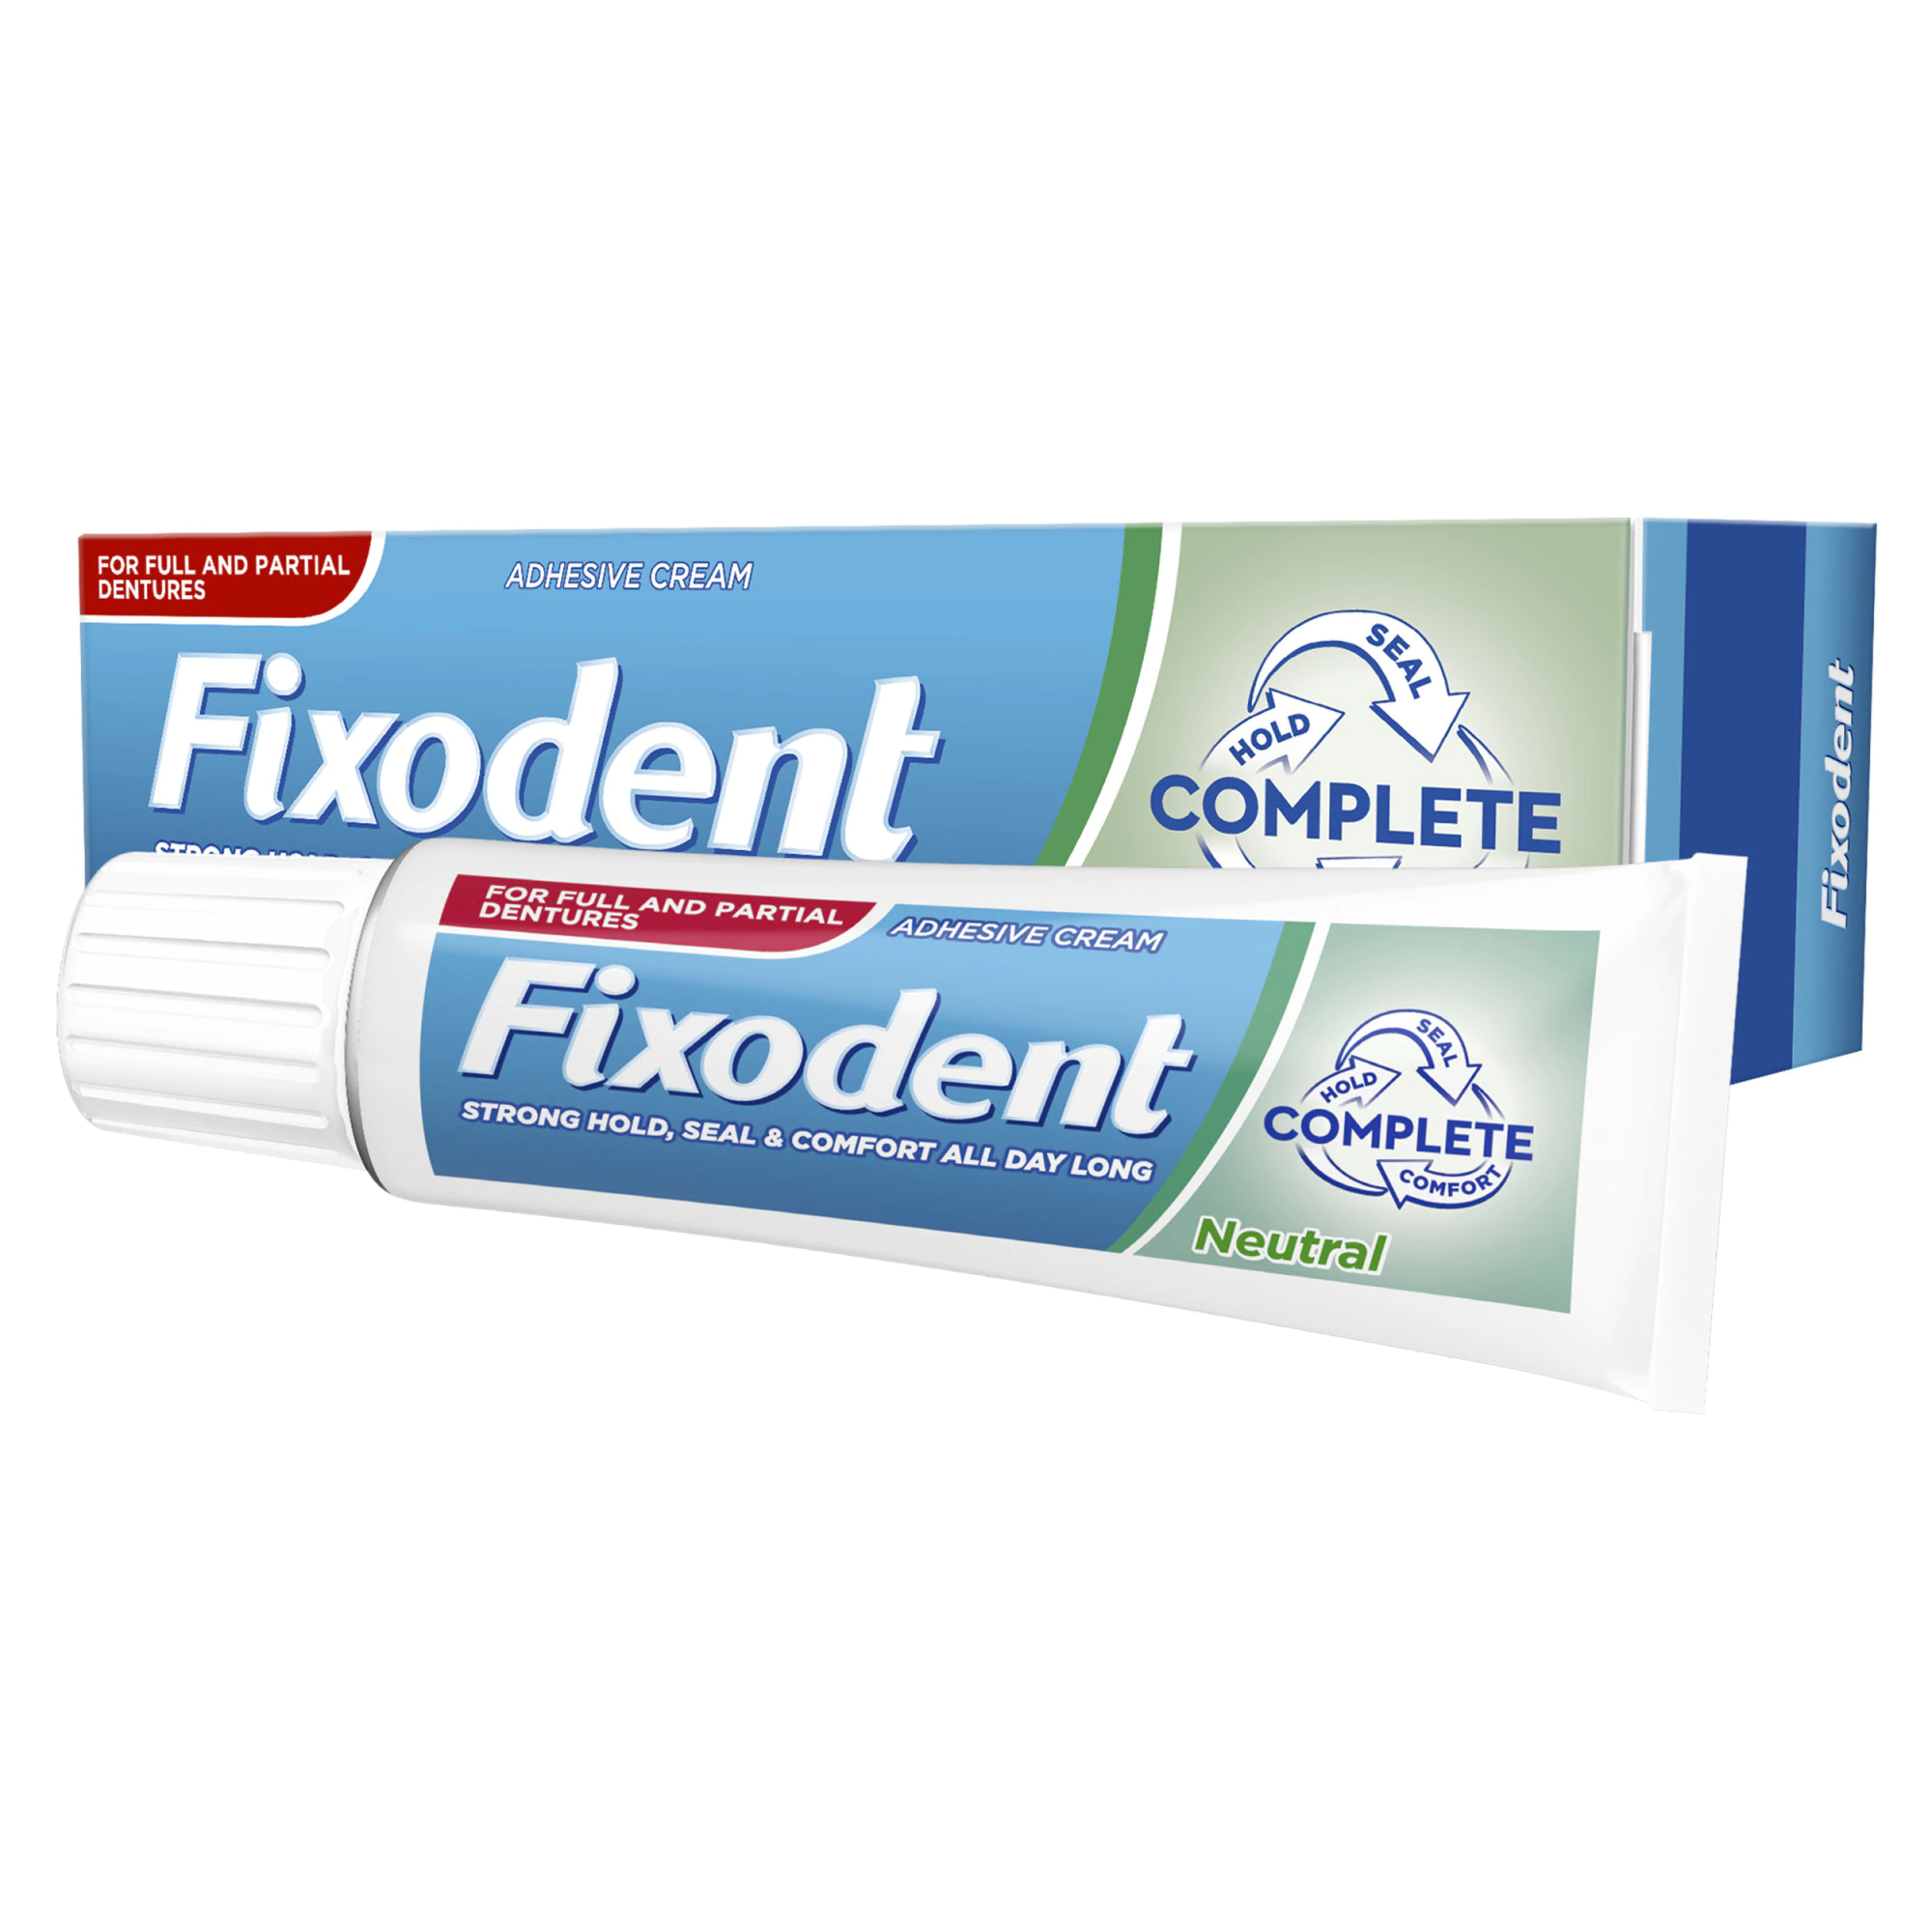 Alte produse igiena dentara - FIXODENT CREMA ADEZIVA PROTEZE DENTARE NEUTRU 47GR 12/BAX, lucidiusmarket.ro